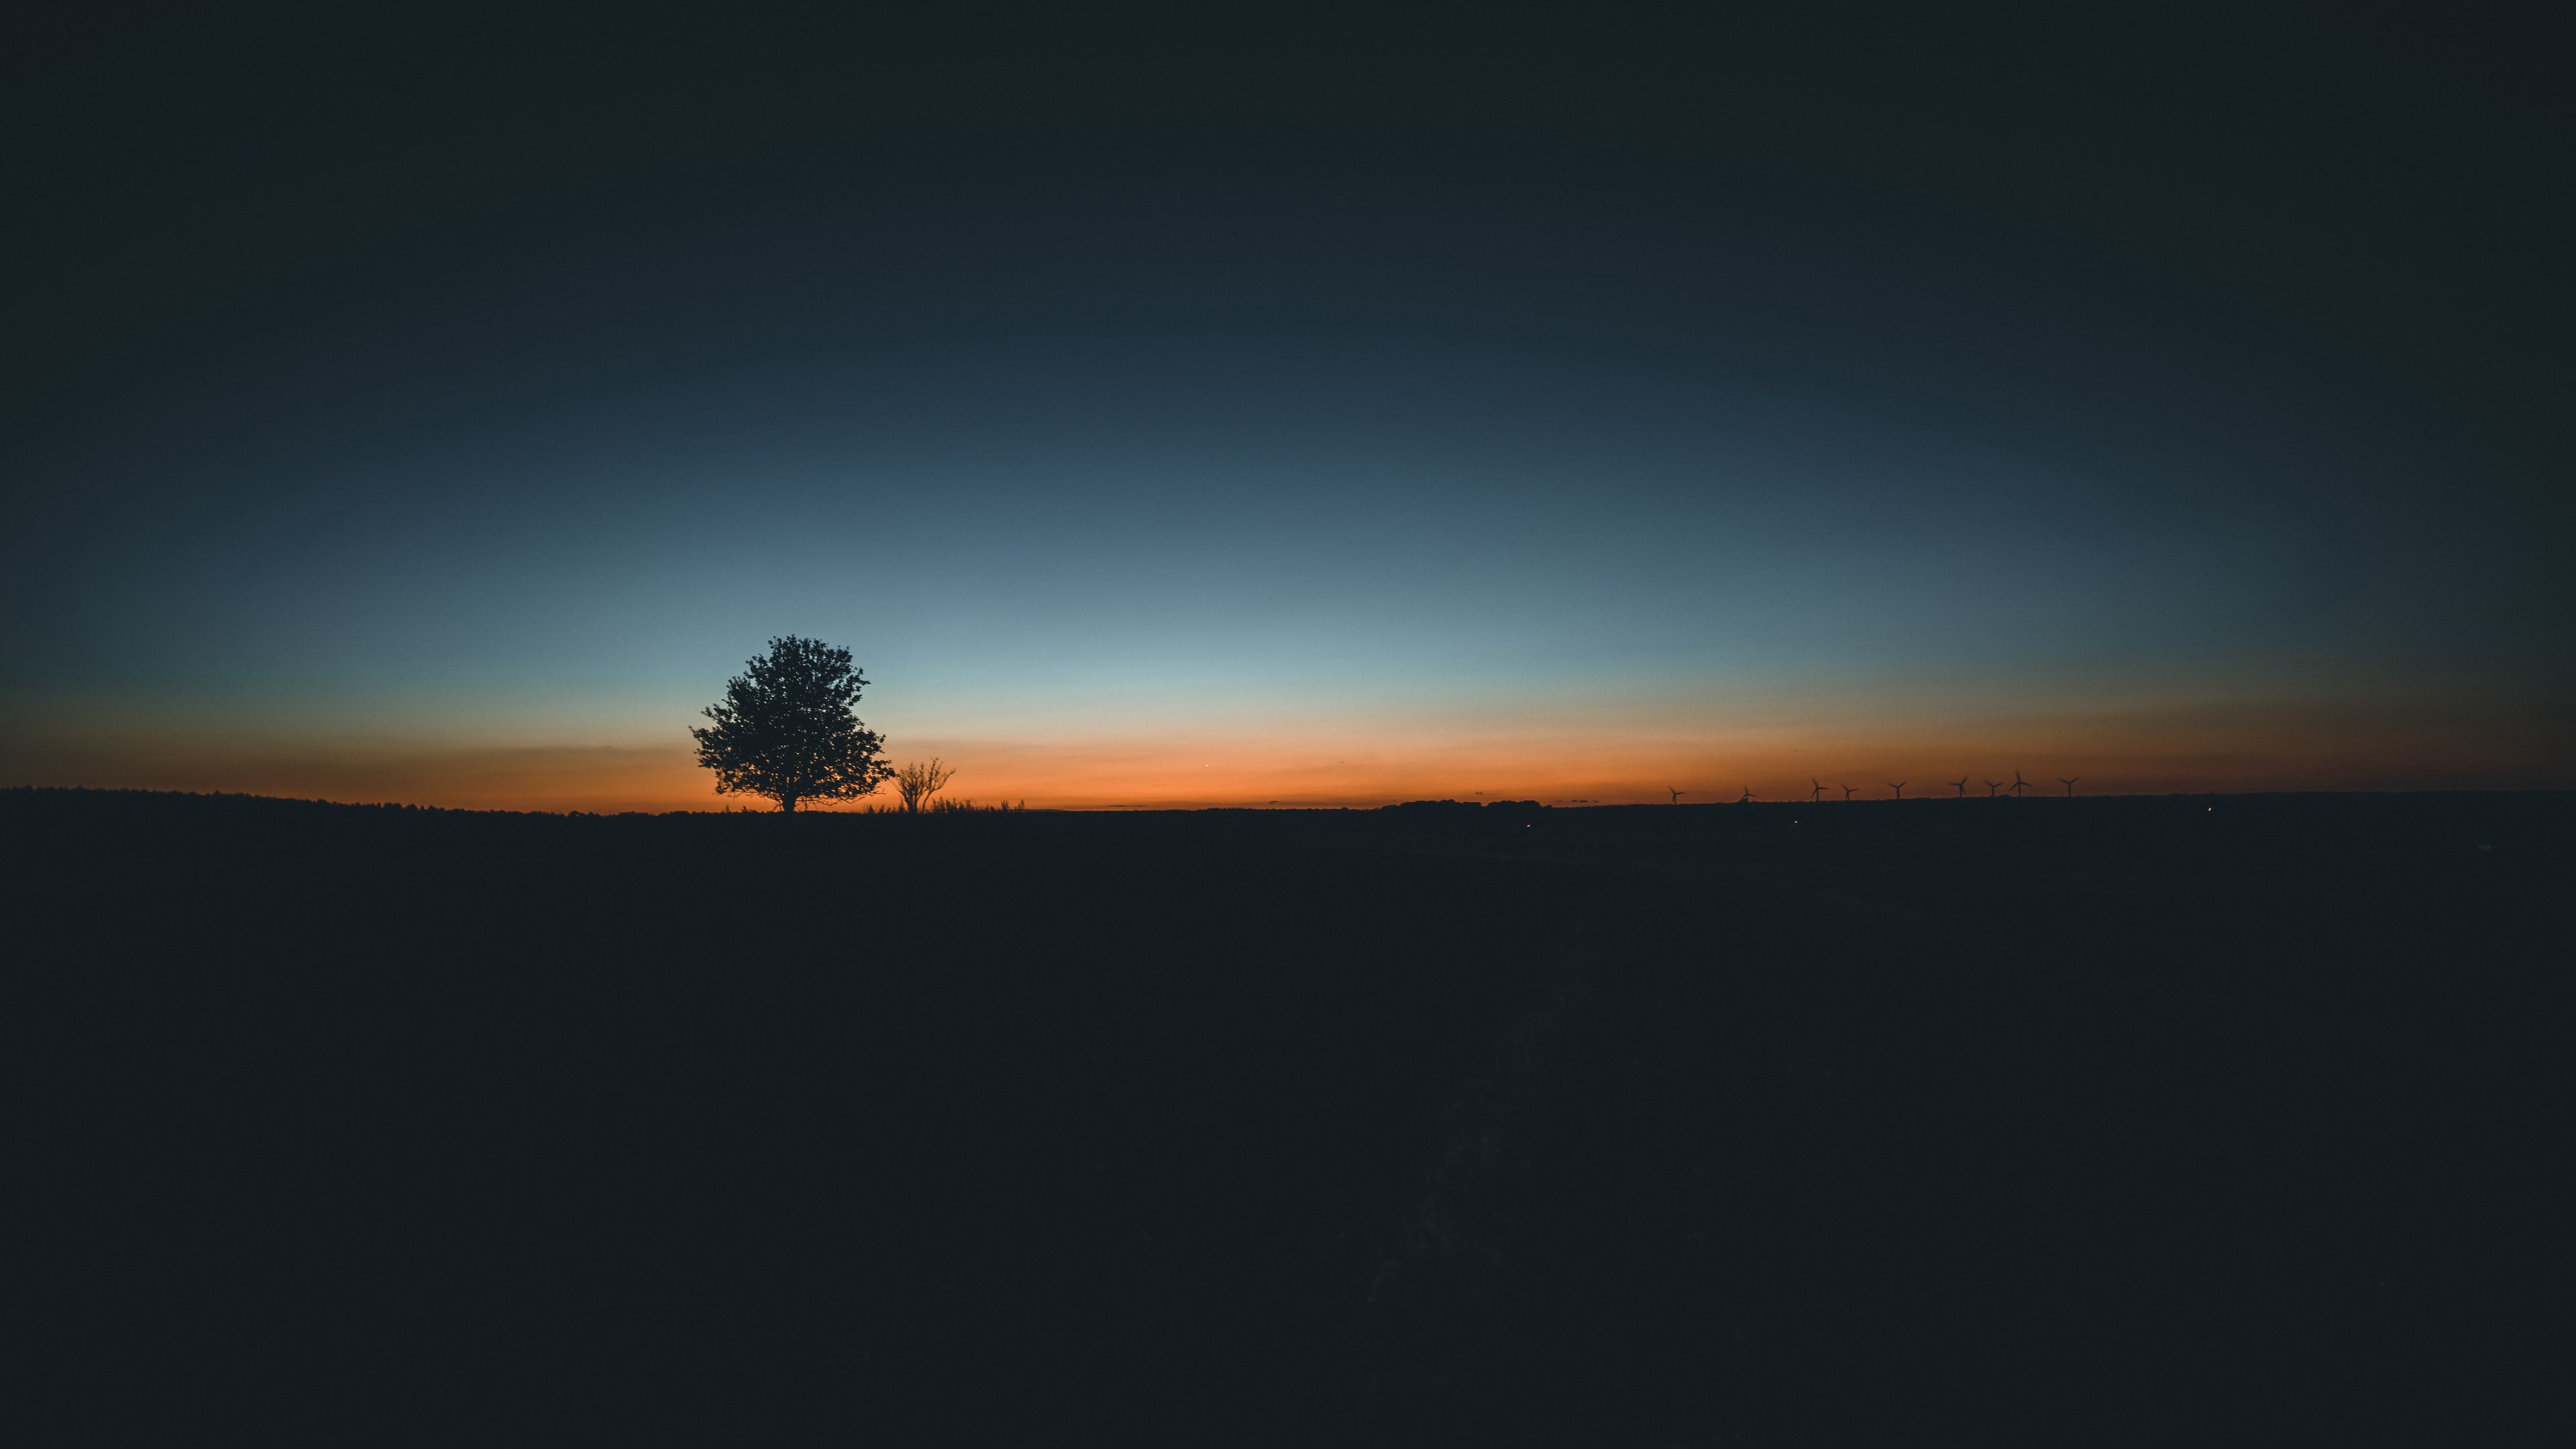 Download wallpaper 3840x2160 tree, horizon, minimalism, sunset 4k uhd 16:9 HD background